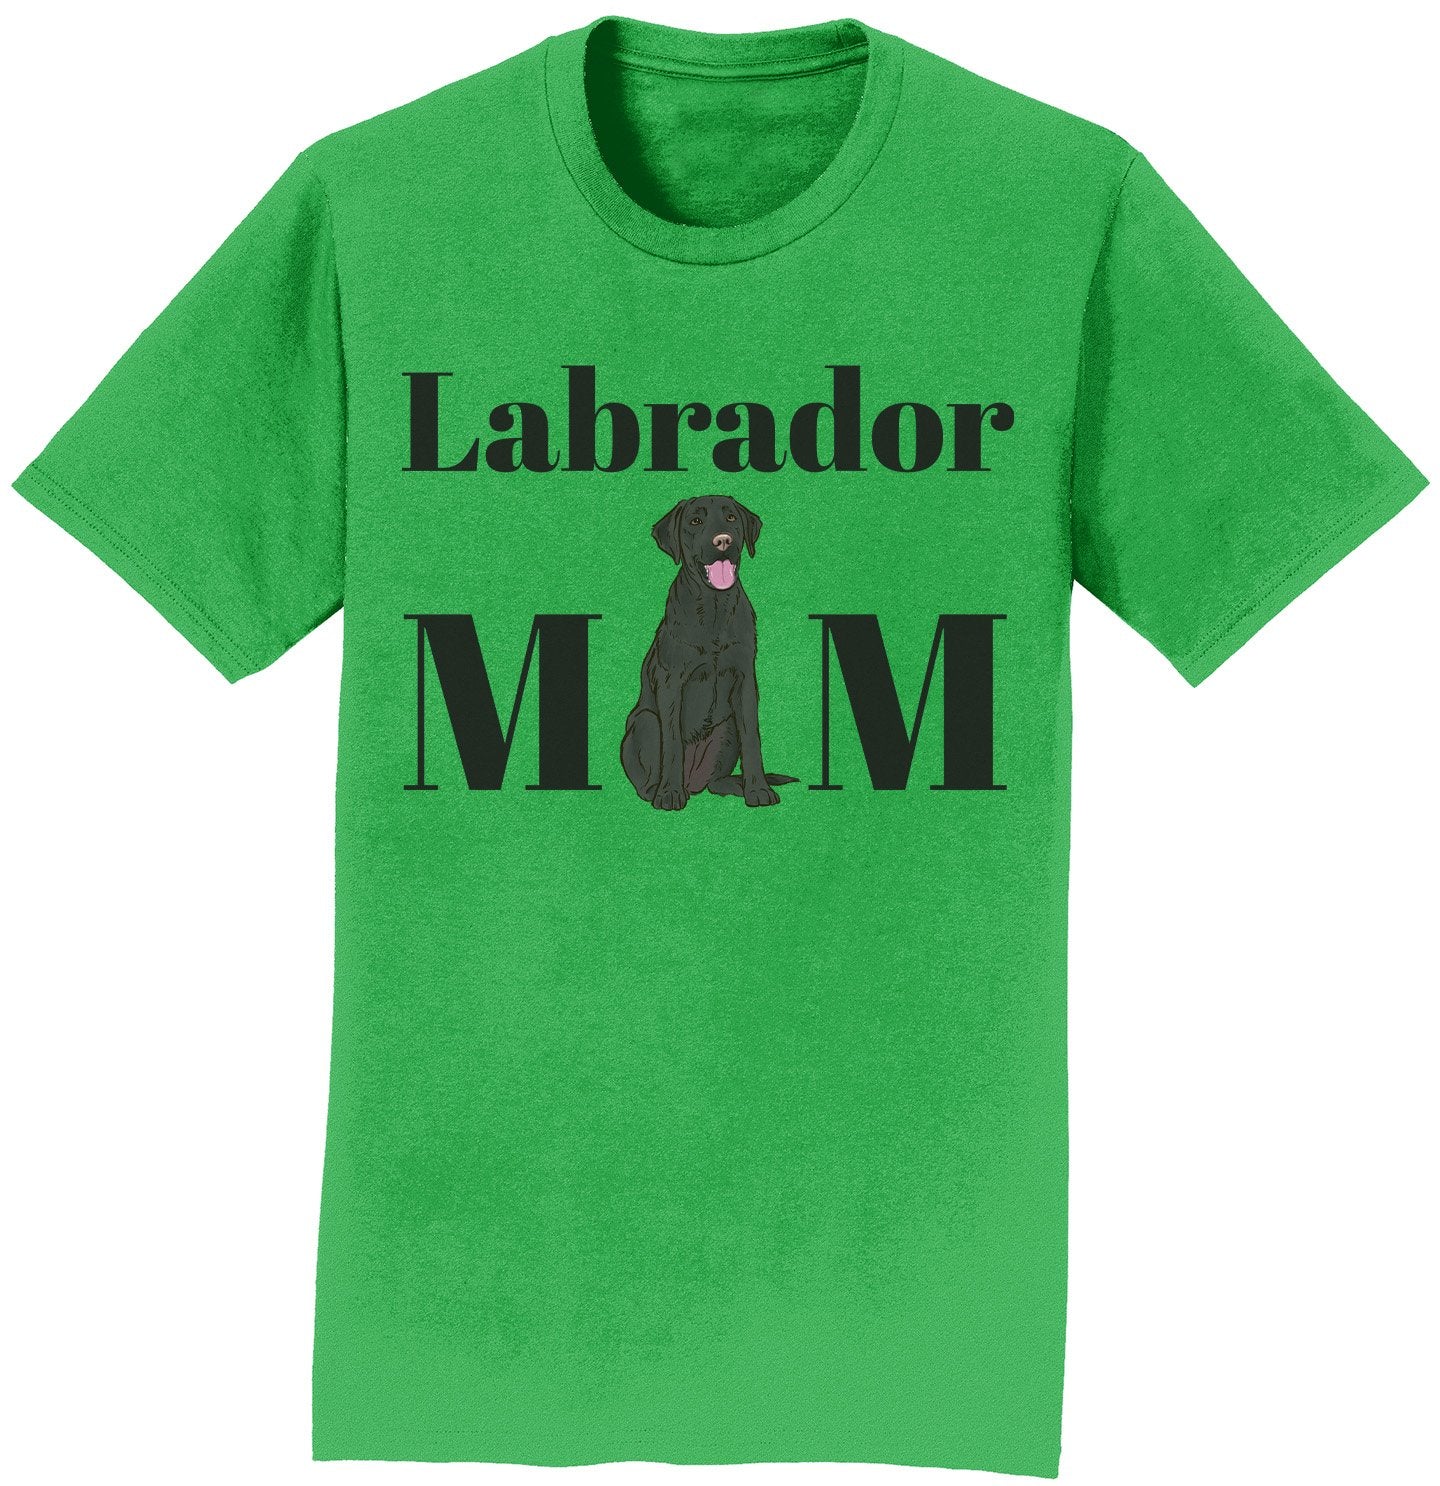 Black Labrador Mom Illustration - Adult Unisex T-Shirt